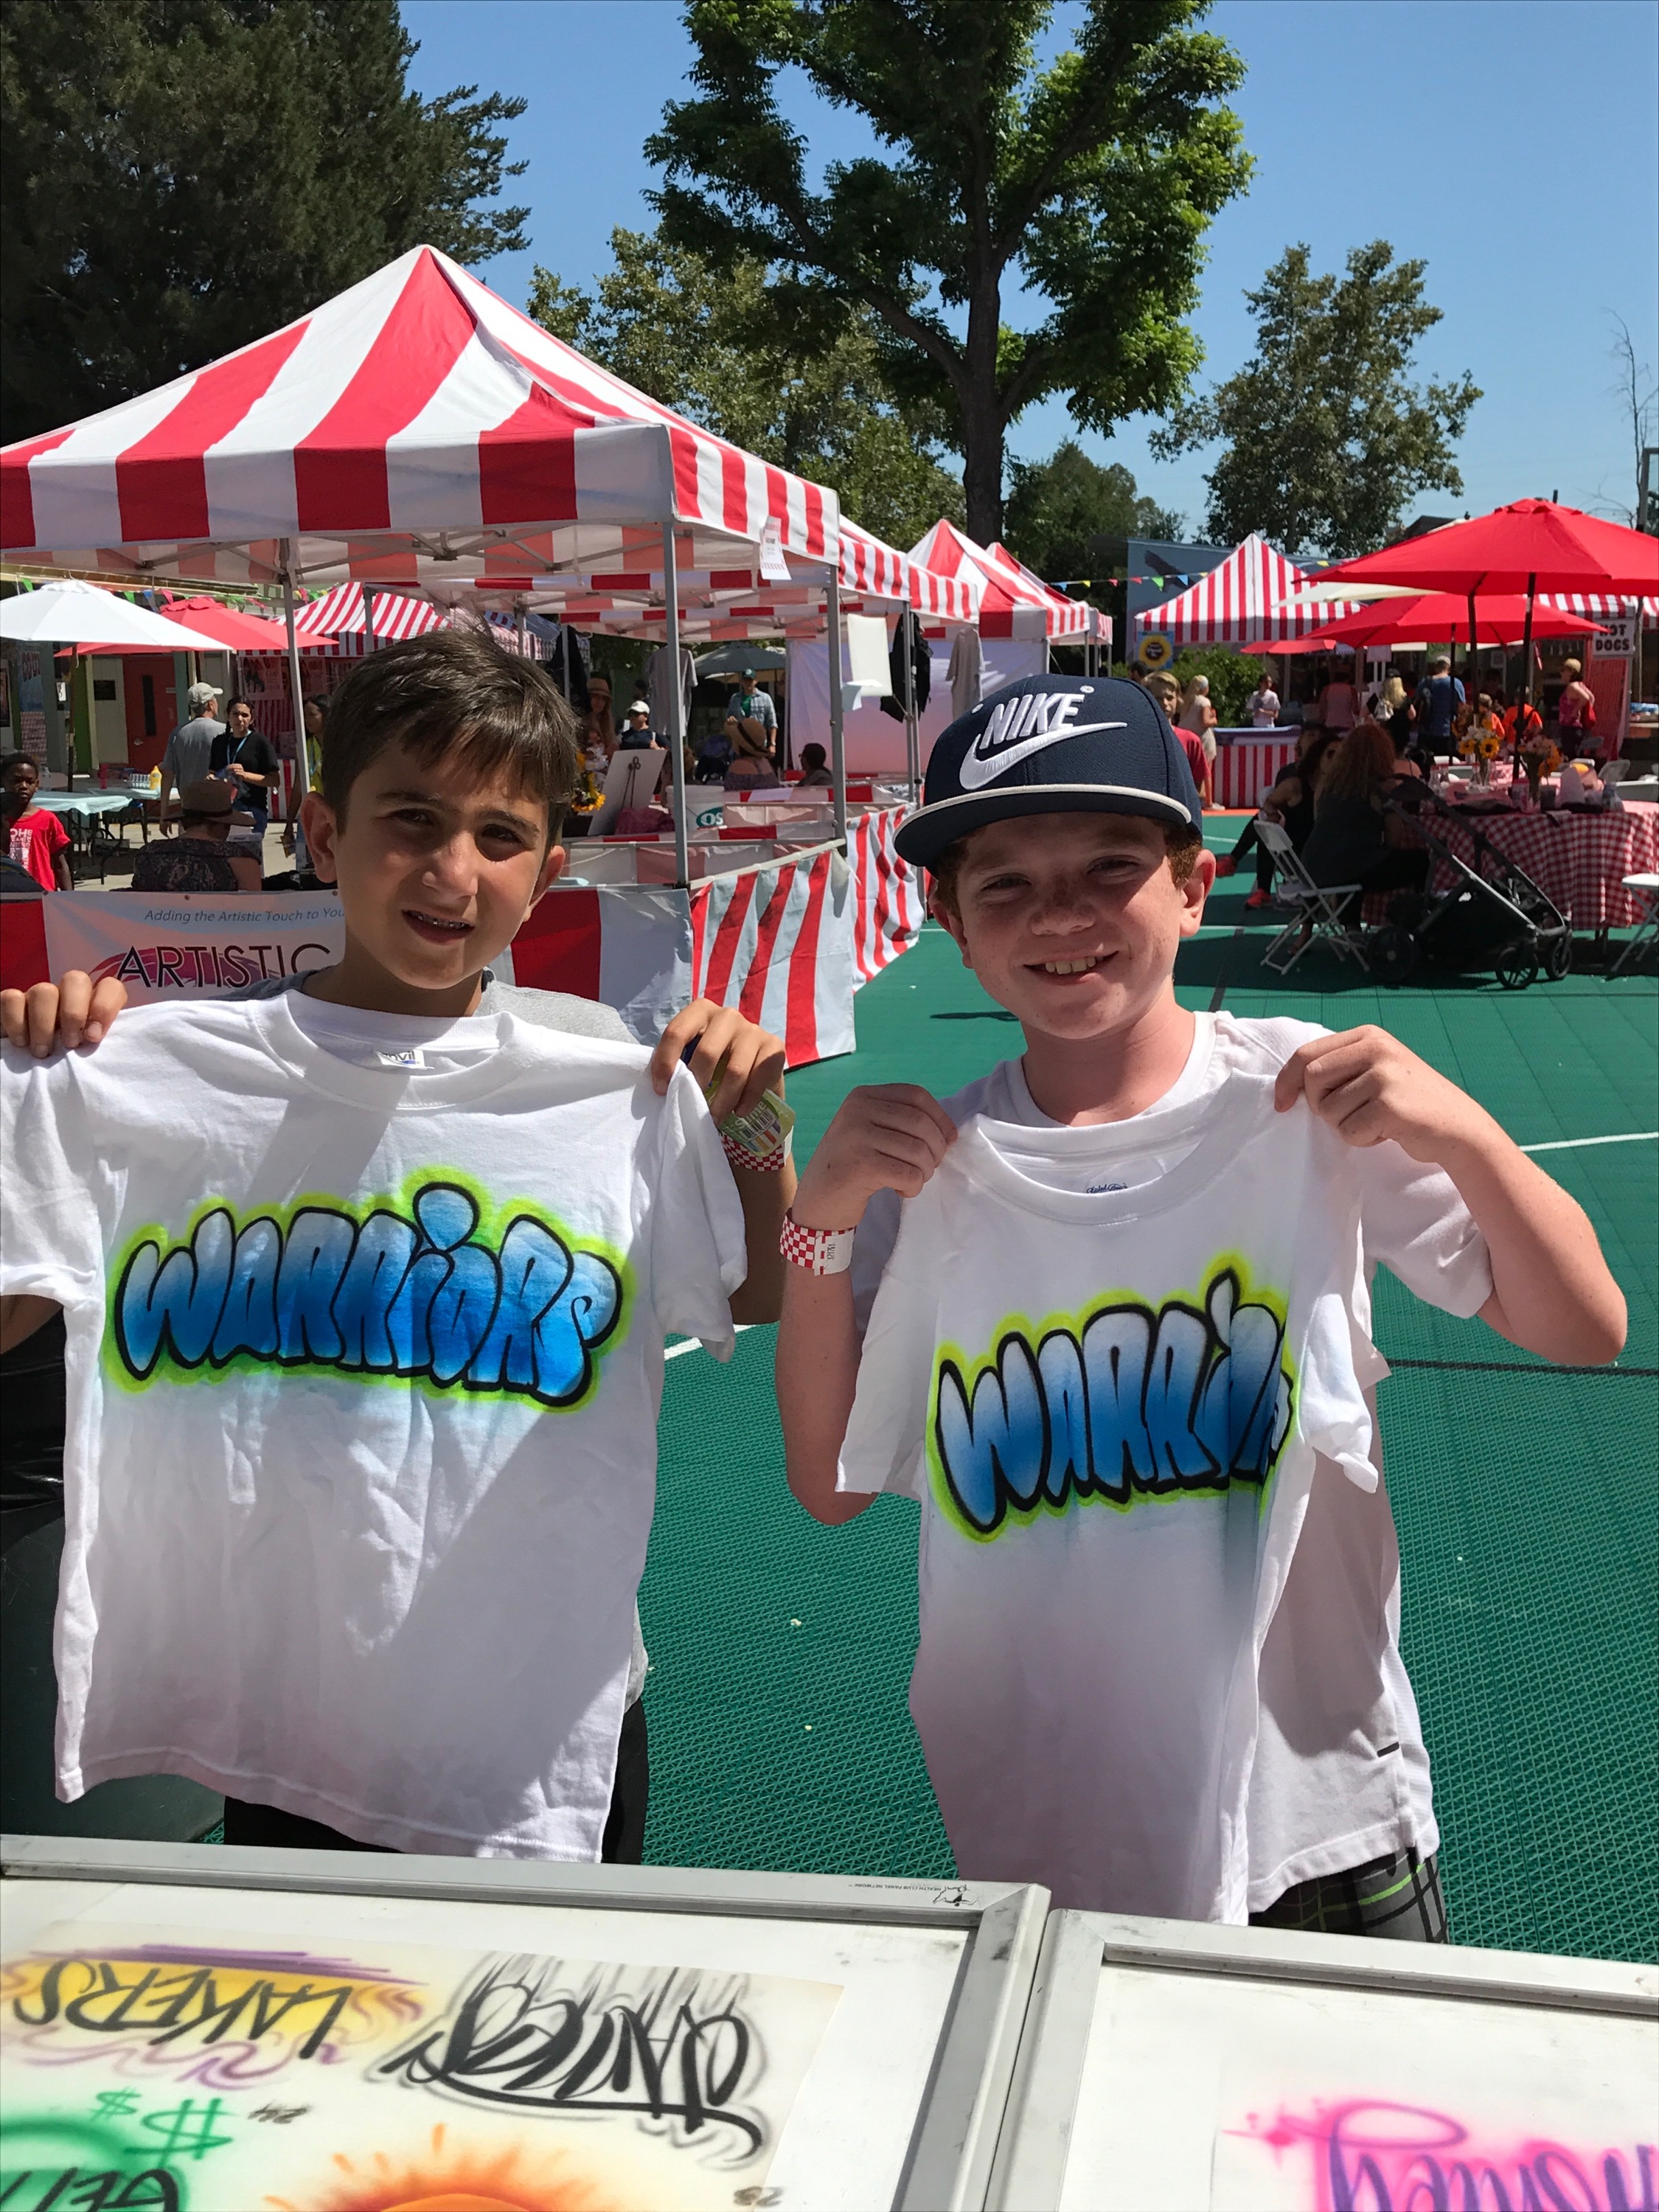 Airbrush t-shirts at a school carnival